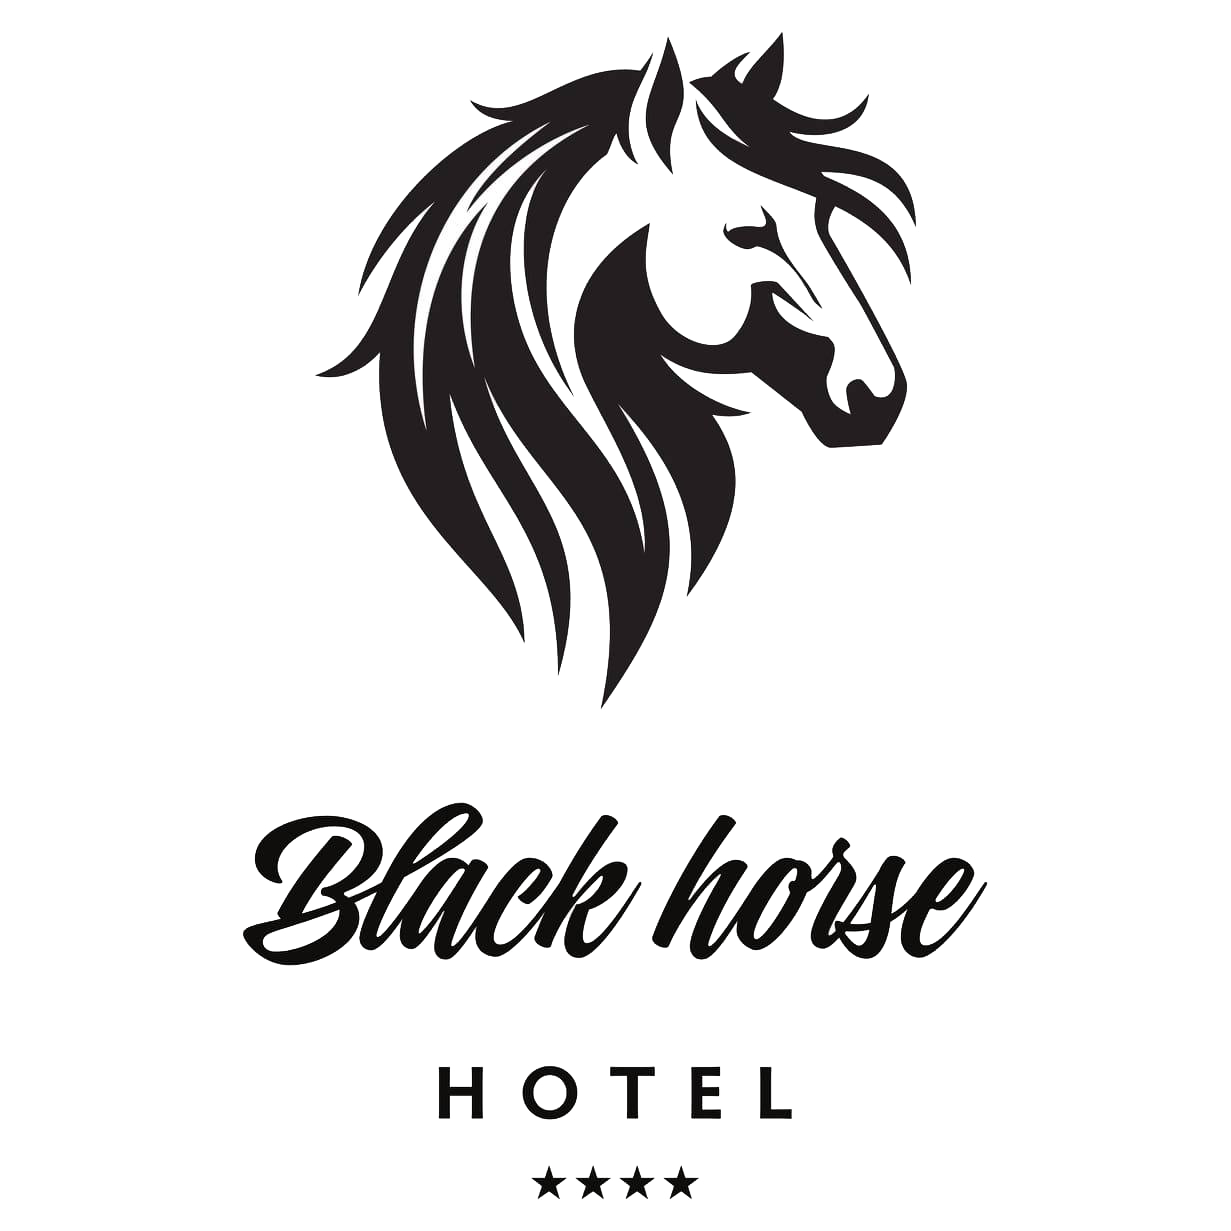 Hotel Black Horse logo